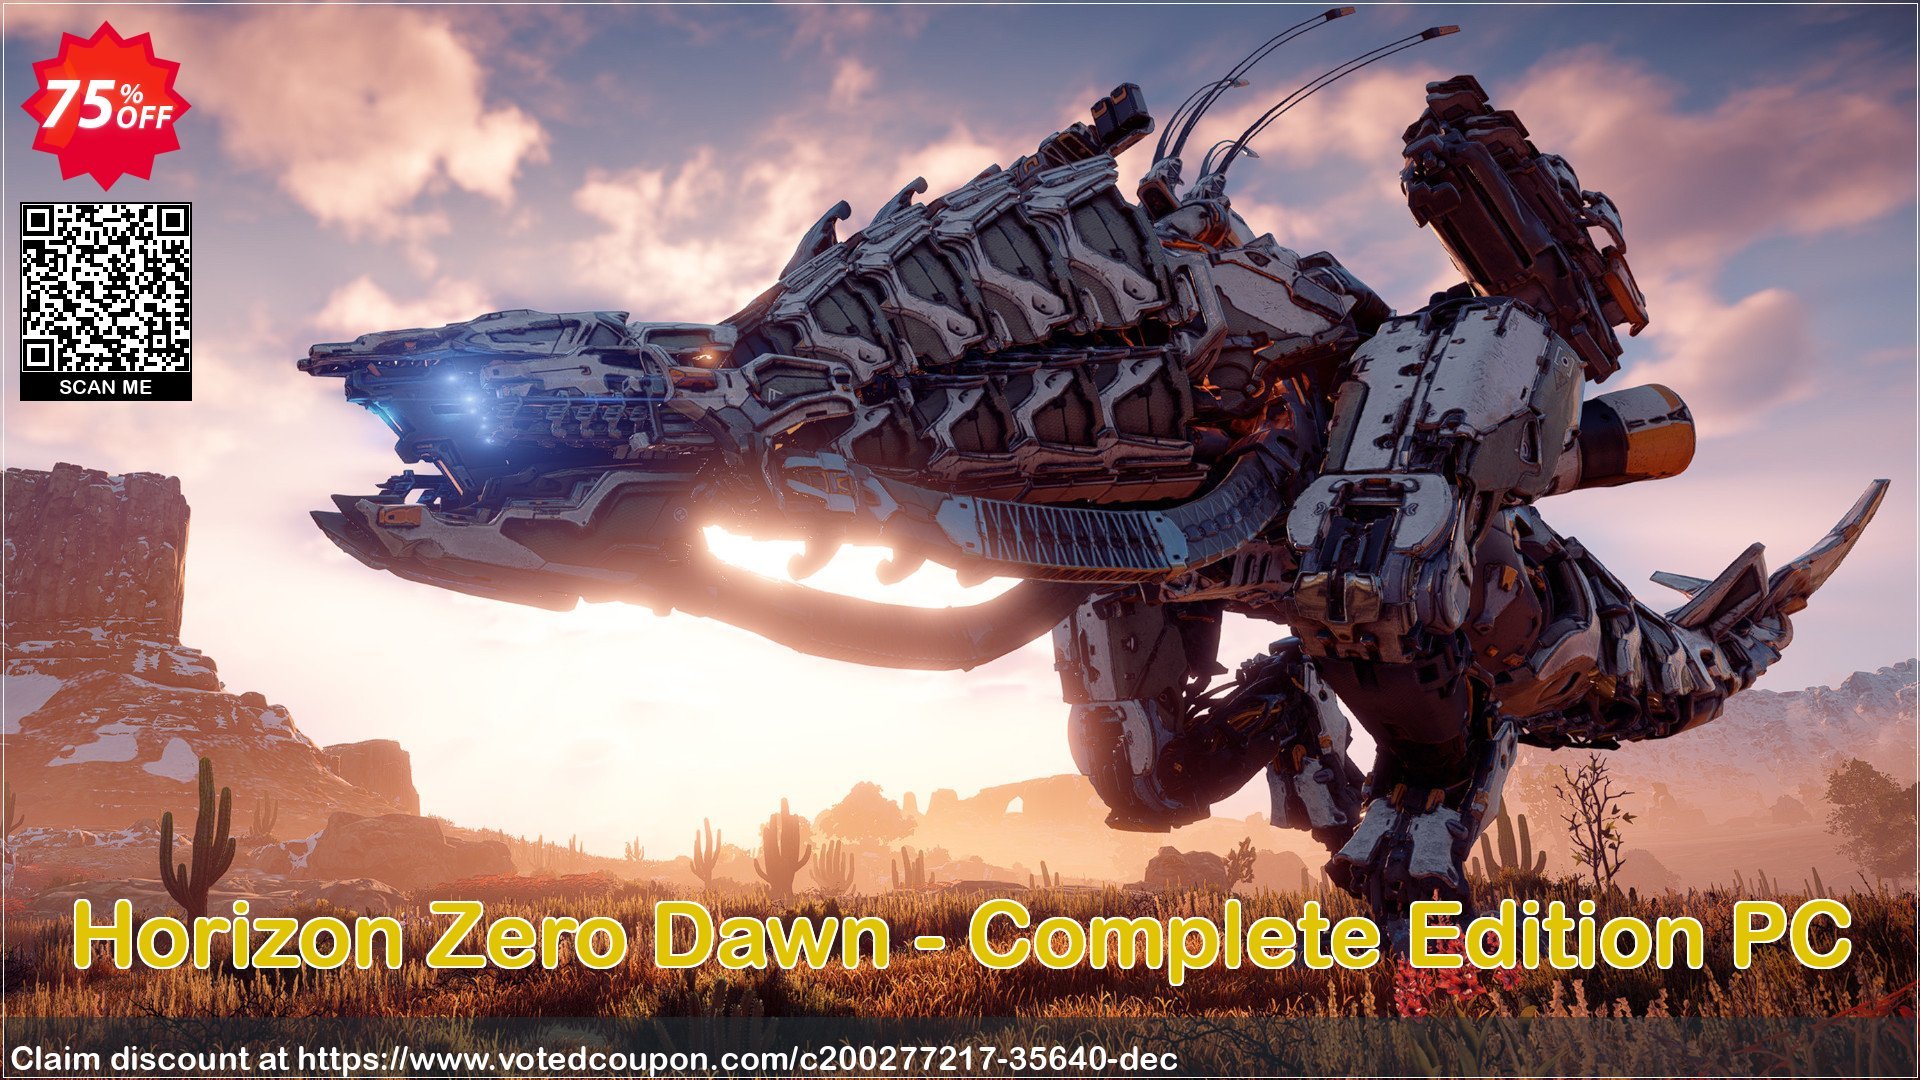 Horizon Zero Dawn - Complete Edition PC voted-on promotion codes